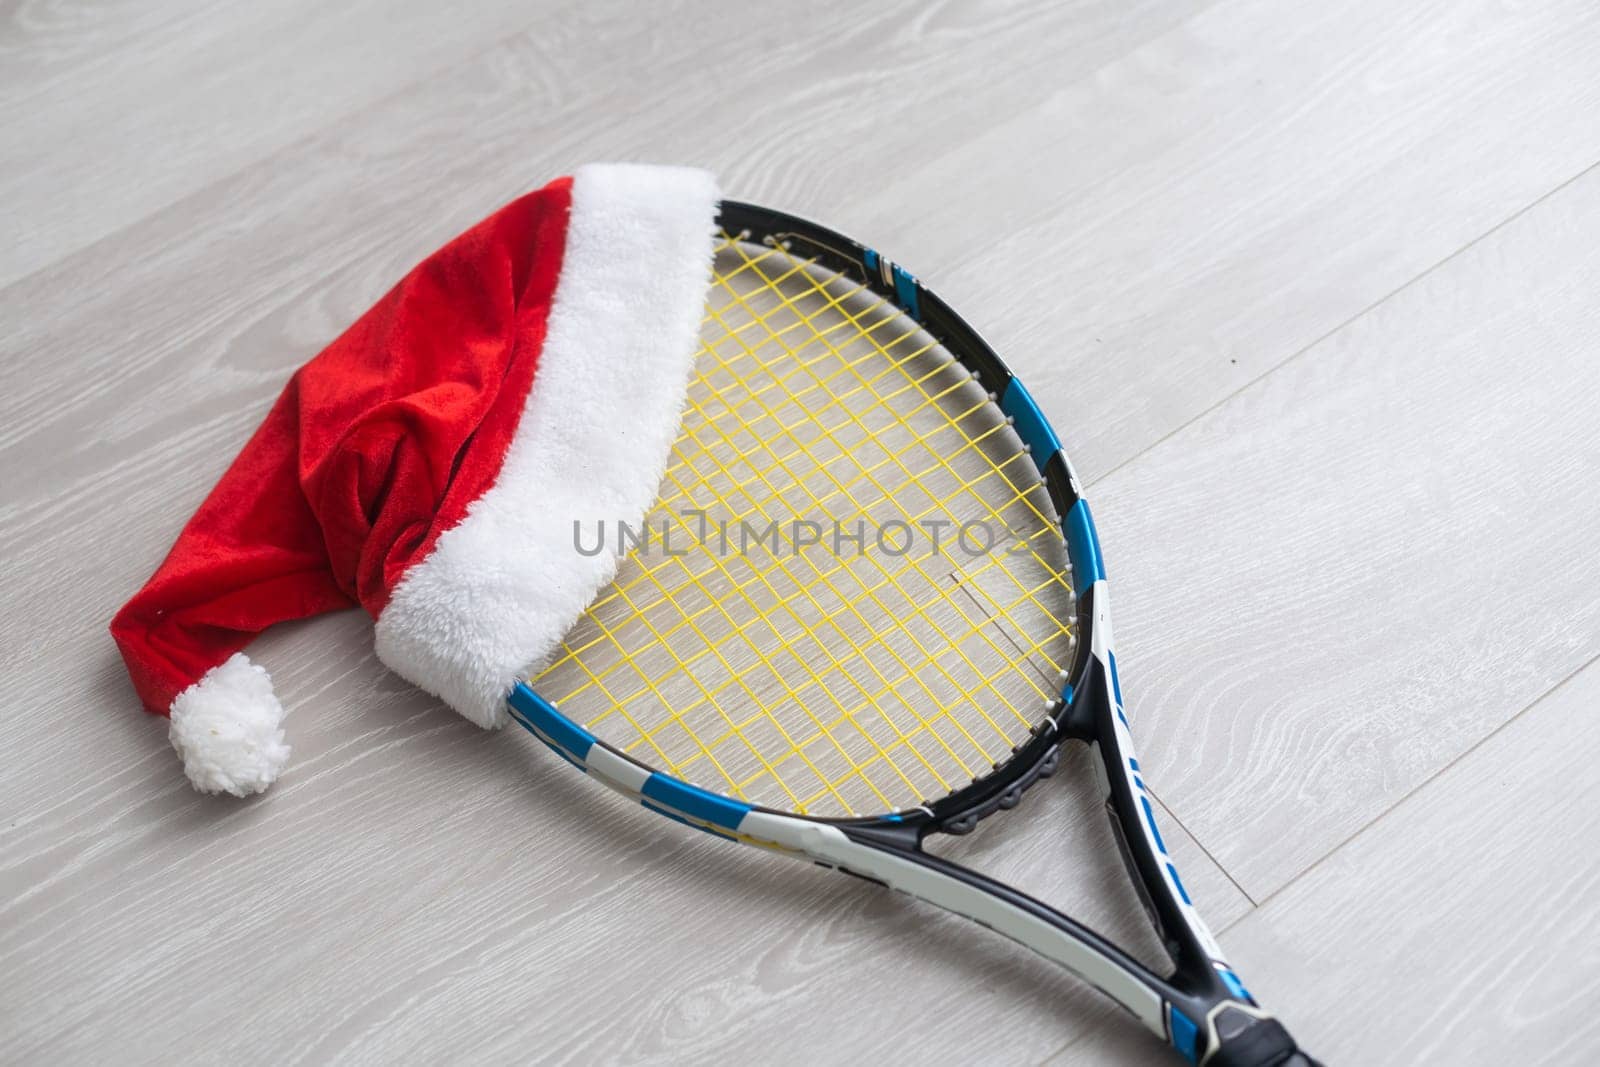 santa hat on tennis racket on white background by Andelov13